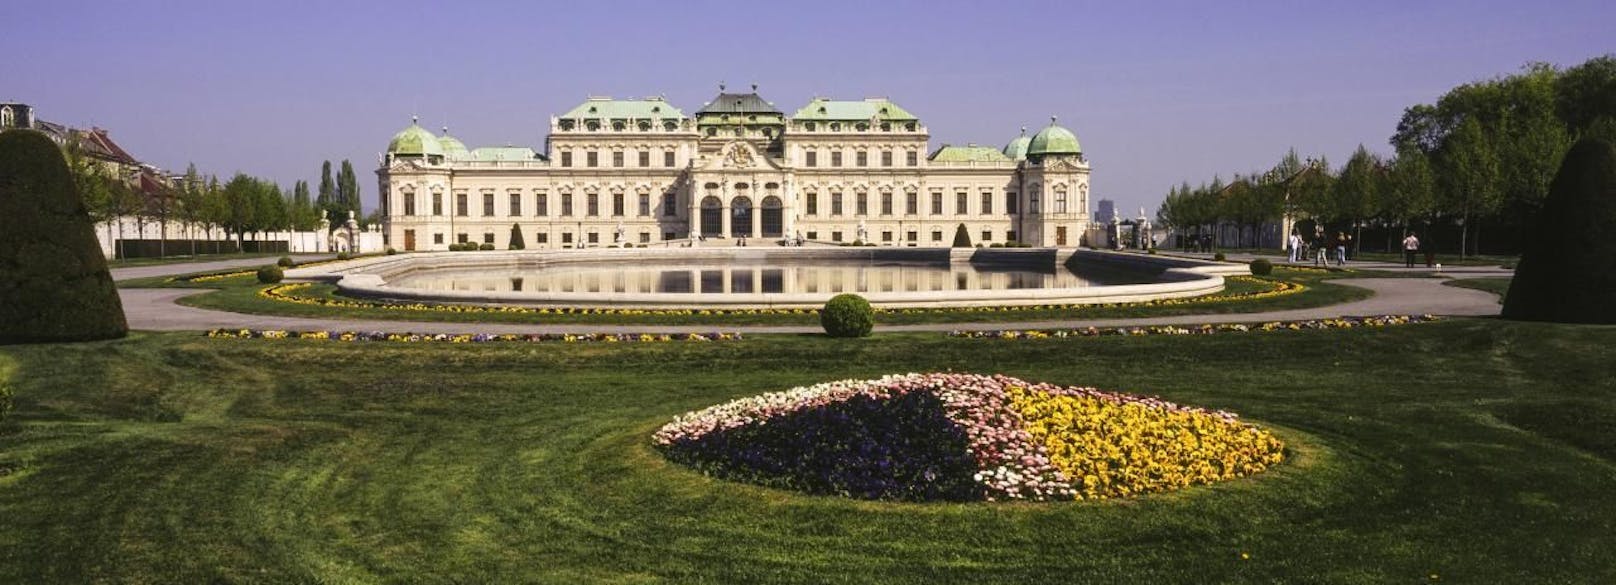 Wien Schloss Belvedere Oberes Belvedere